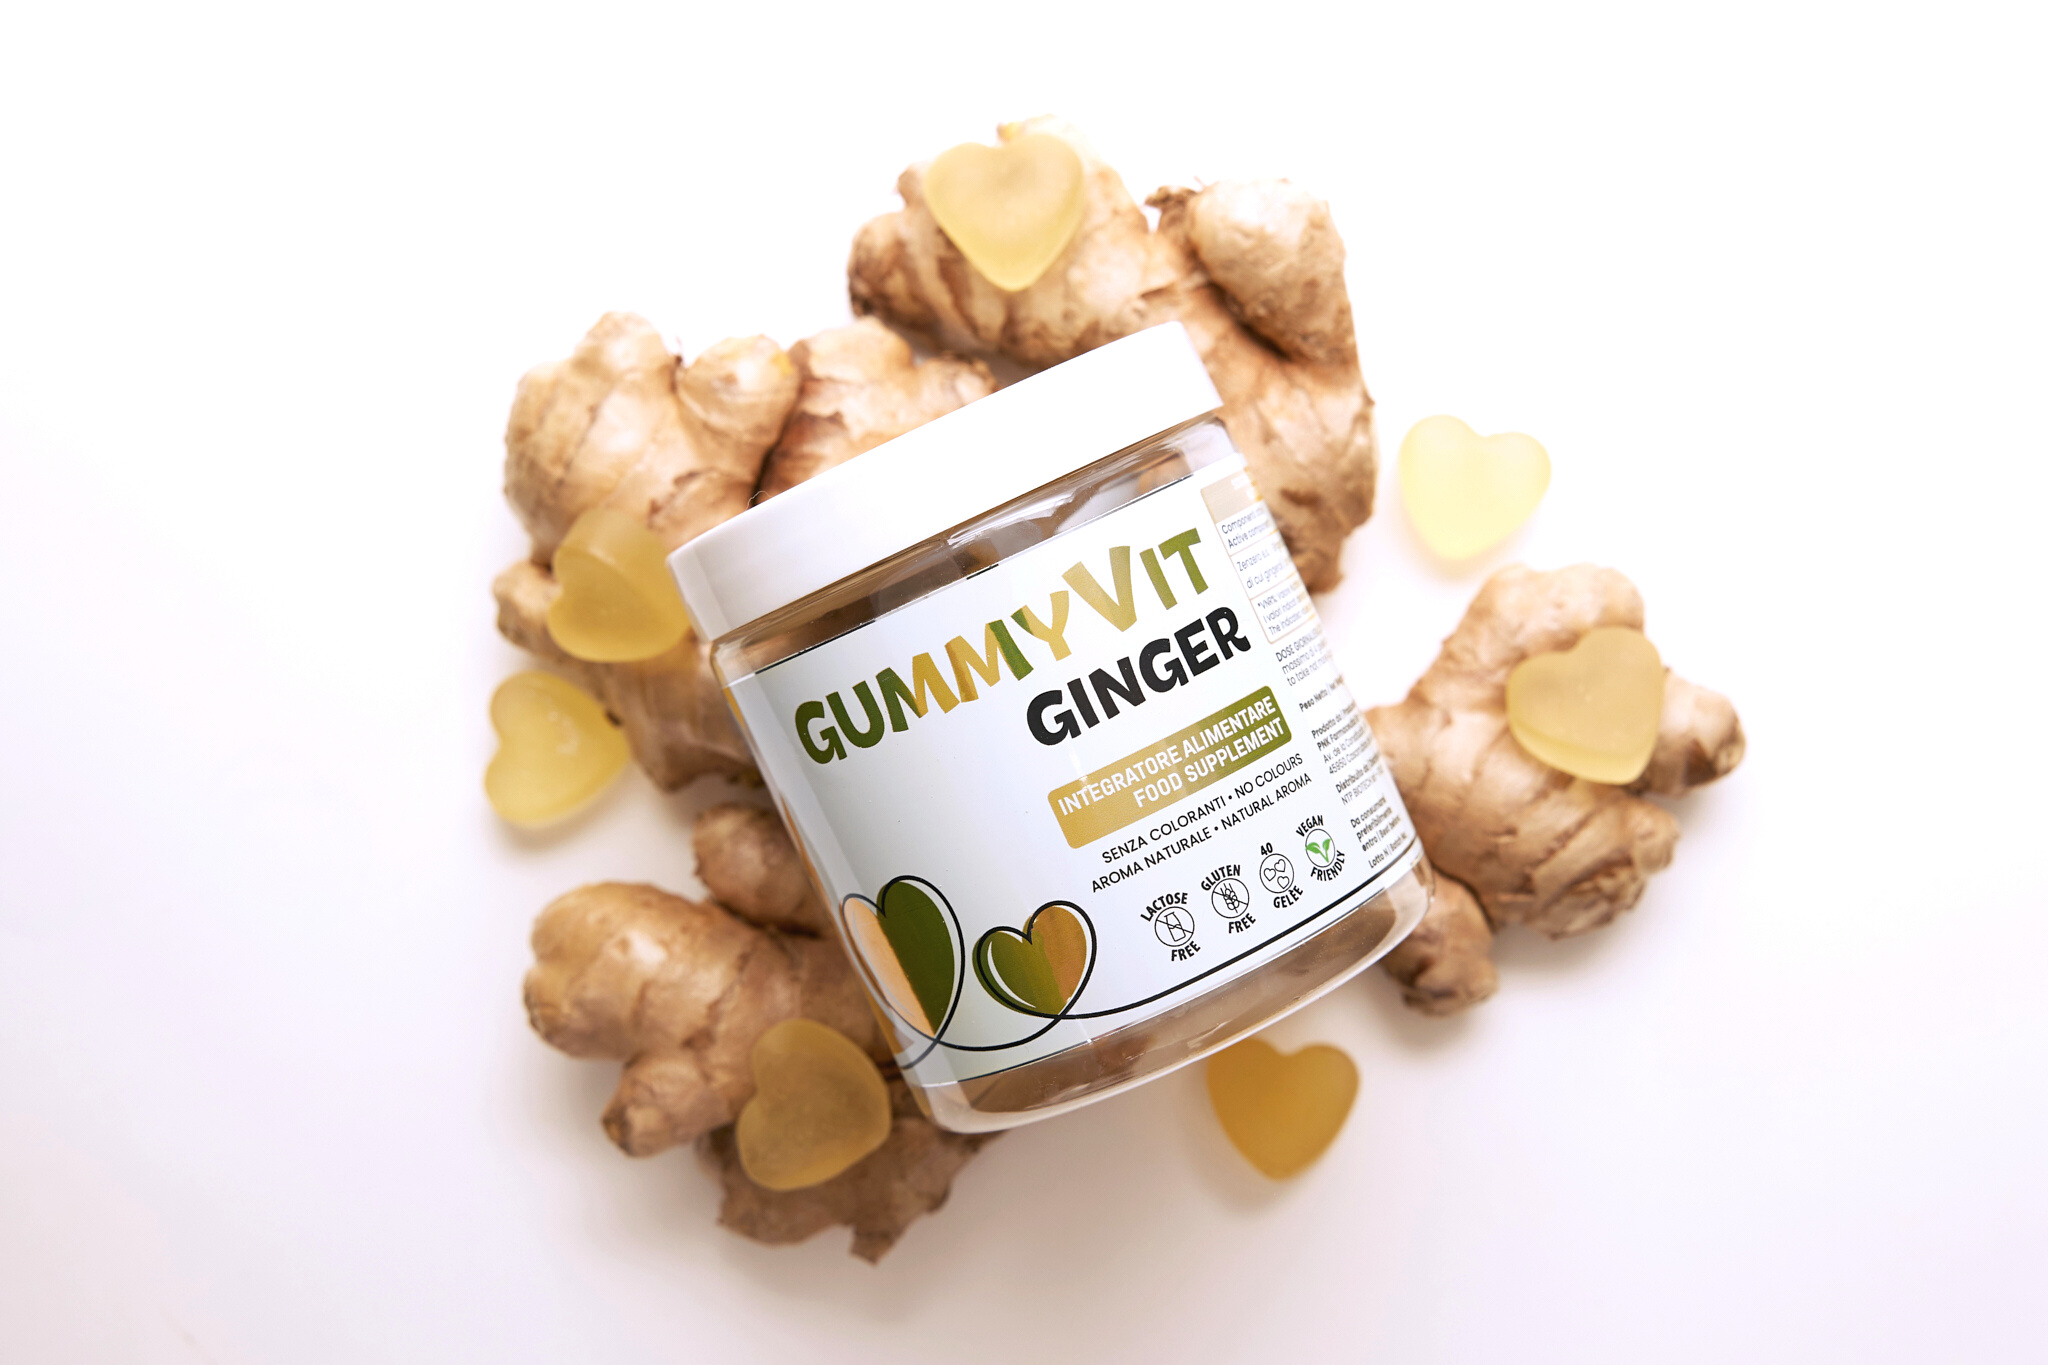 Gummyvit Ginger - Gummy ginger supplement